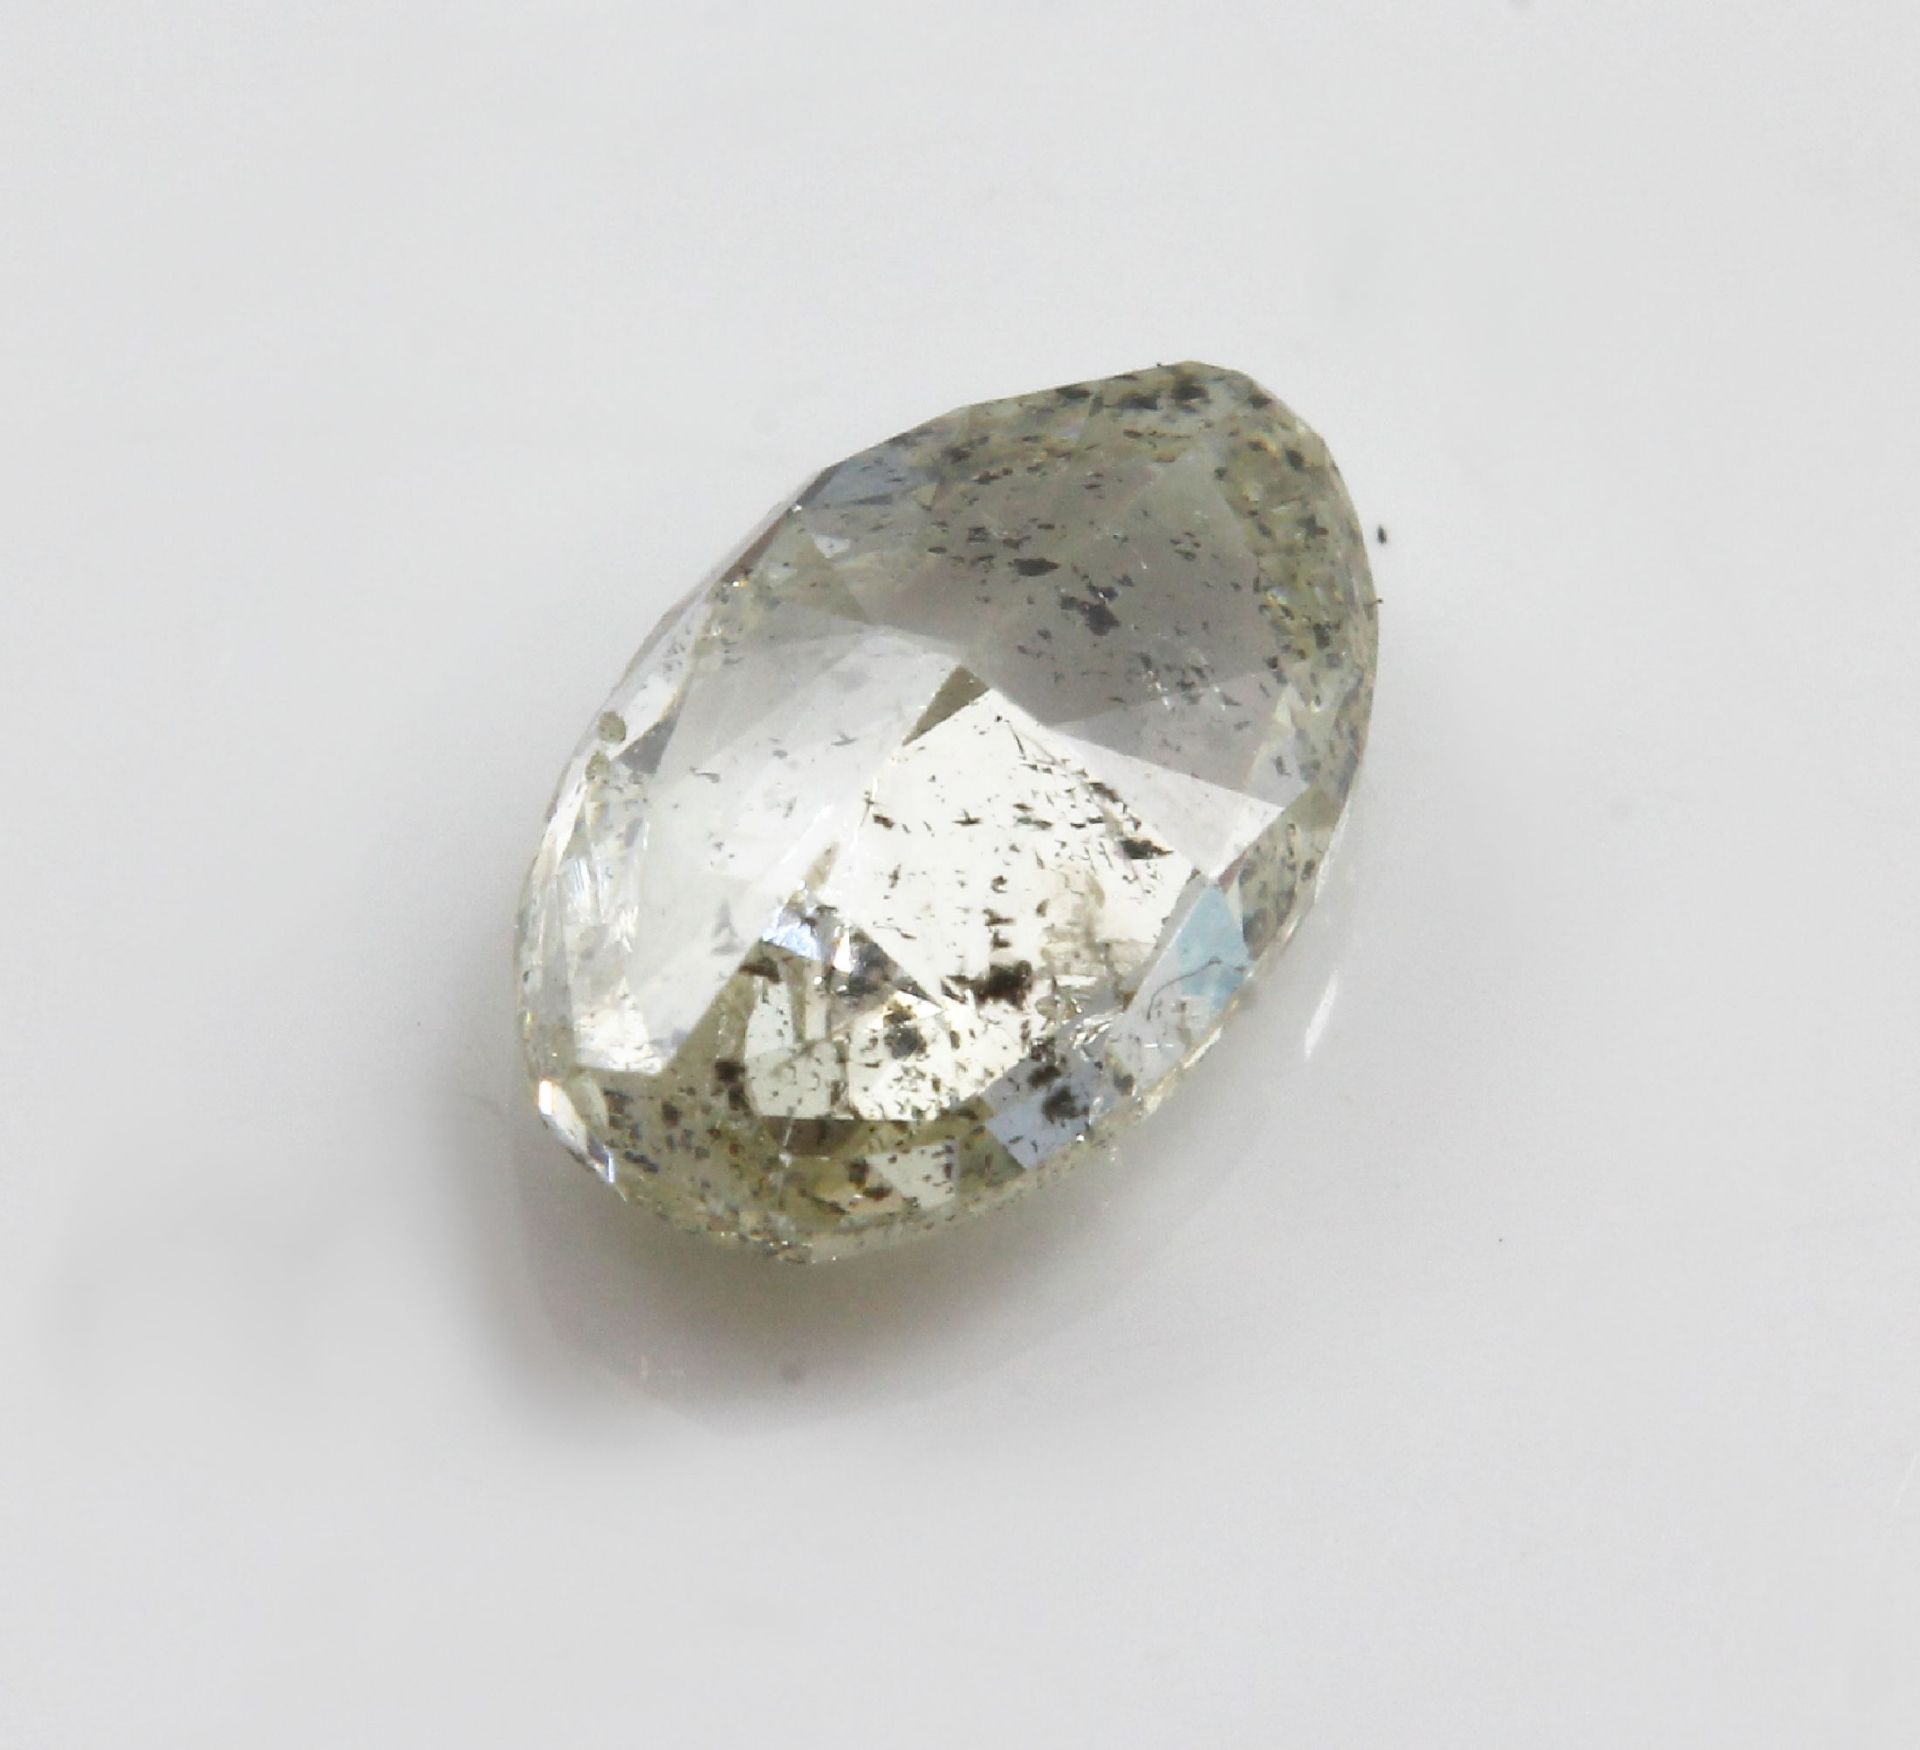 Loser Diamantnavettes, 1.00 ct, Nat.Fancy Light Greenish - Image 2 of 2